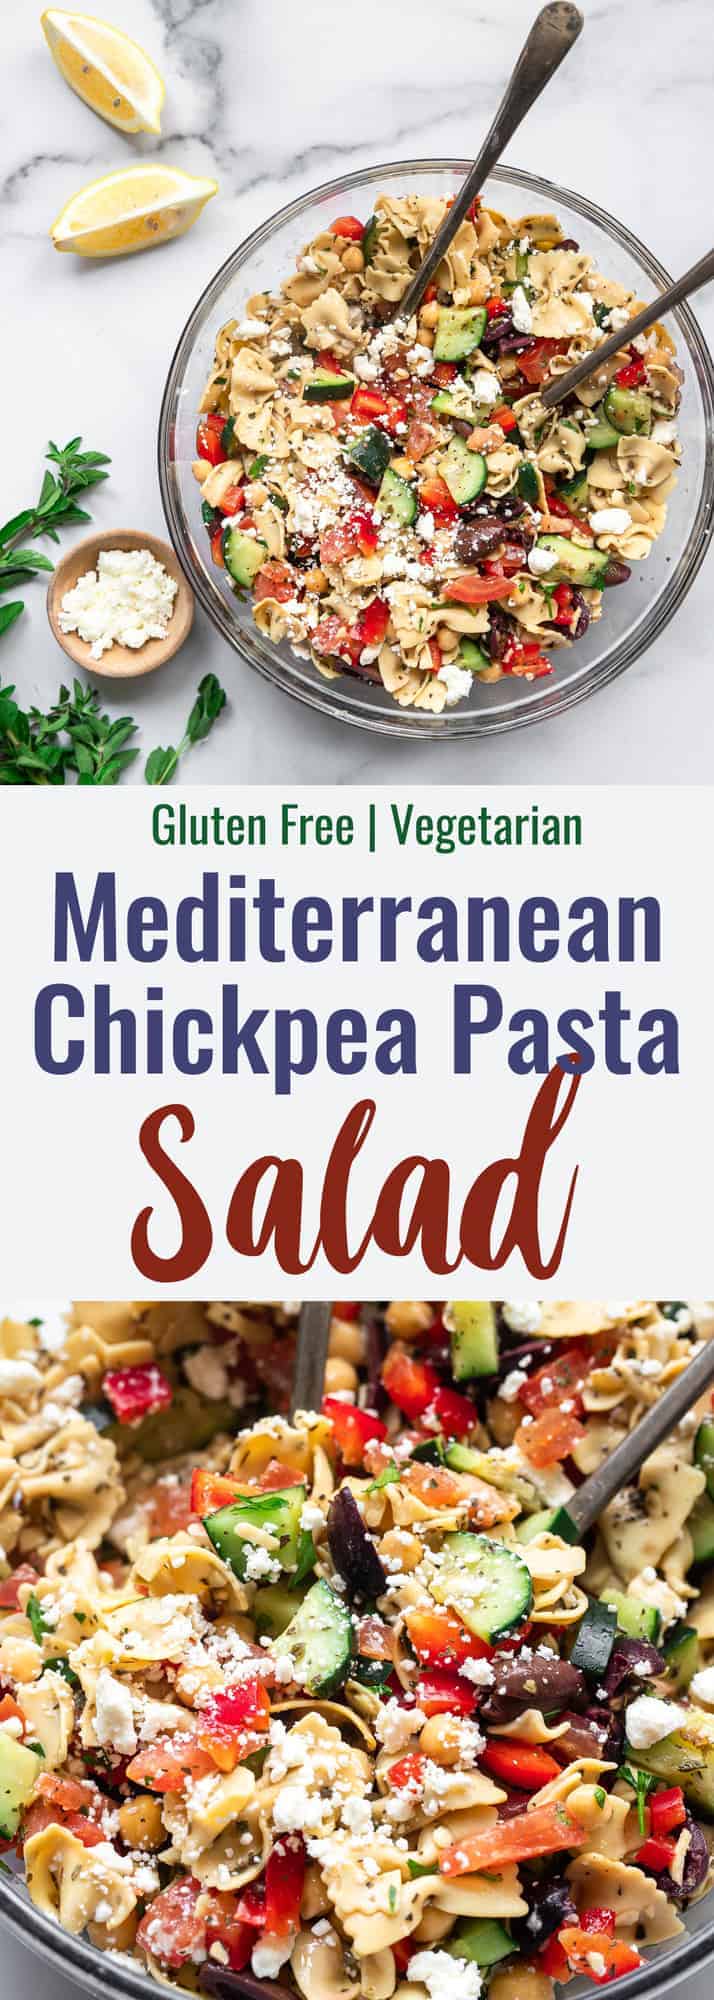 Mediterranean Chickpea Pasta Salad collage image